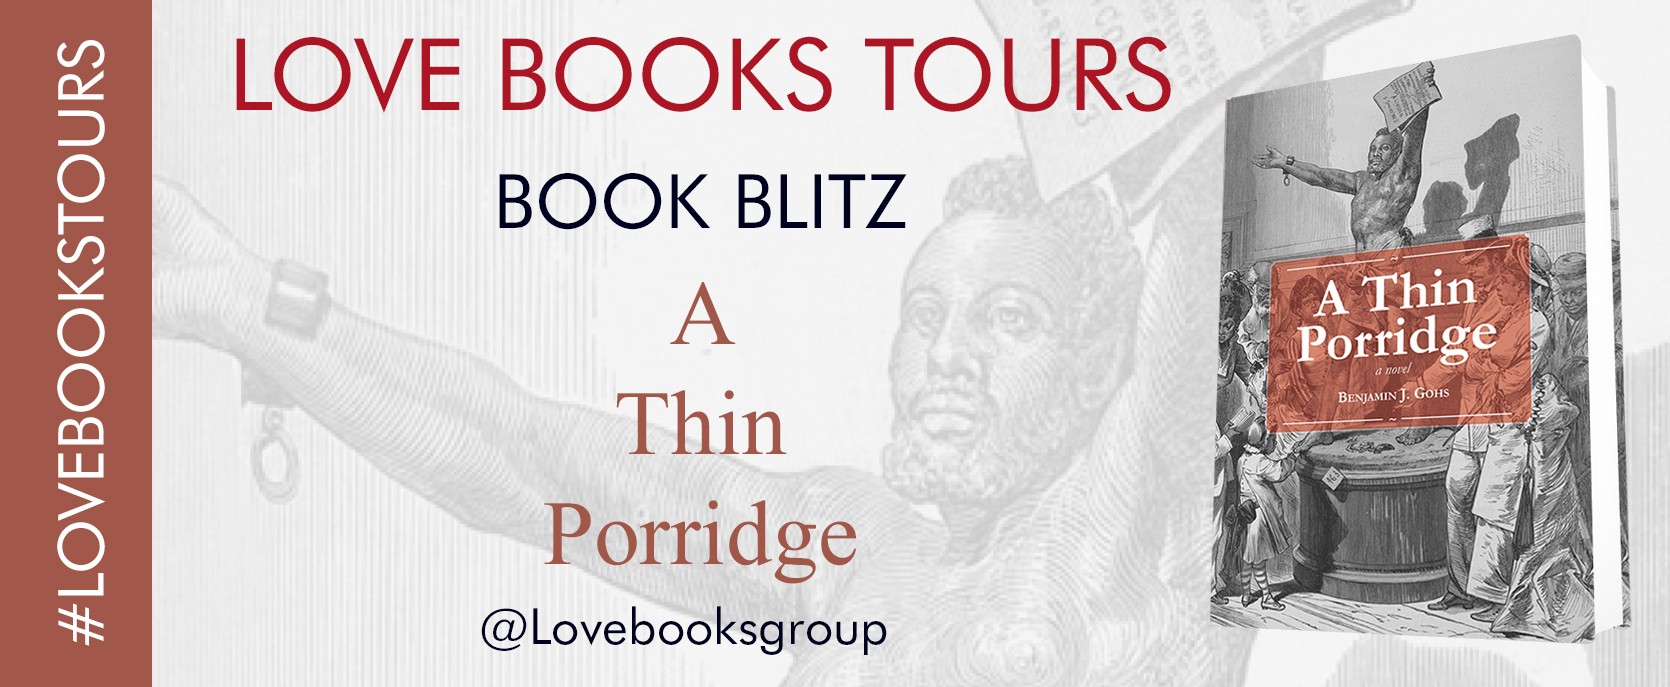 Benjamin Gohs A Thin Porridge book blitz poster